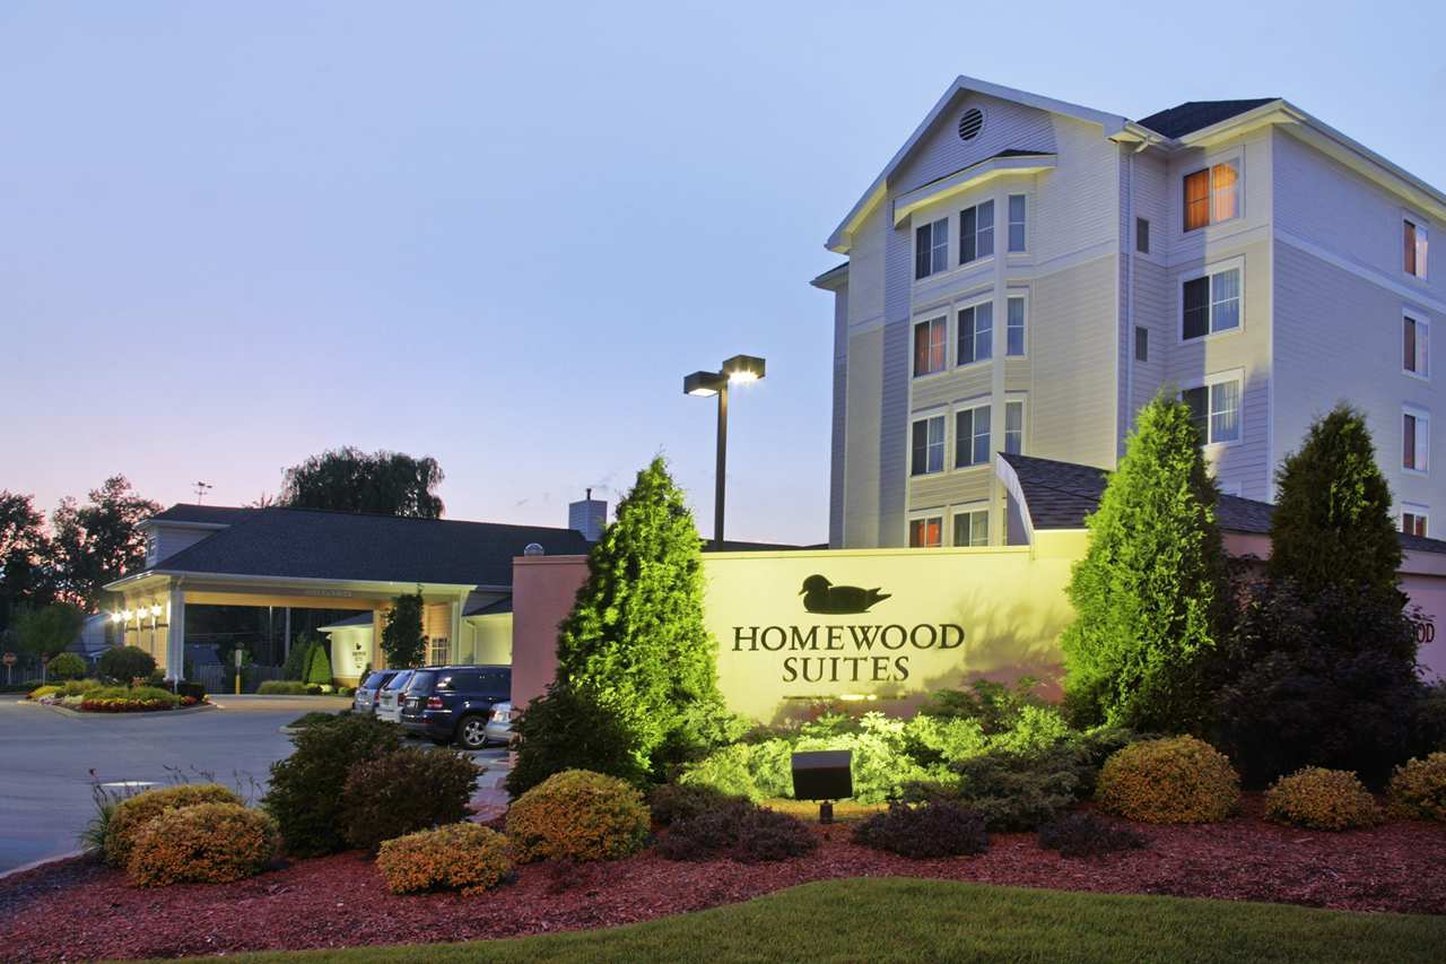 Photo of Homewood Suites by Hilton Buffalo-Amherst, Amherst, NY